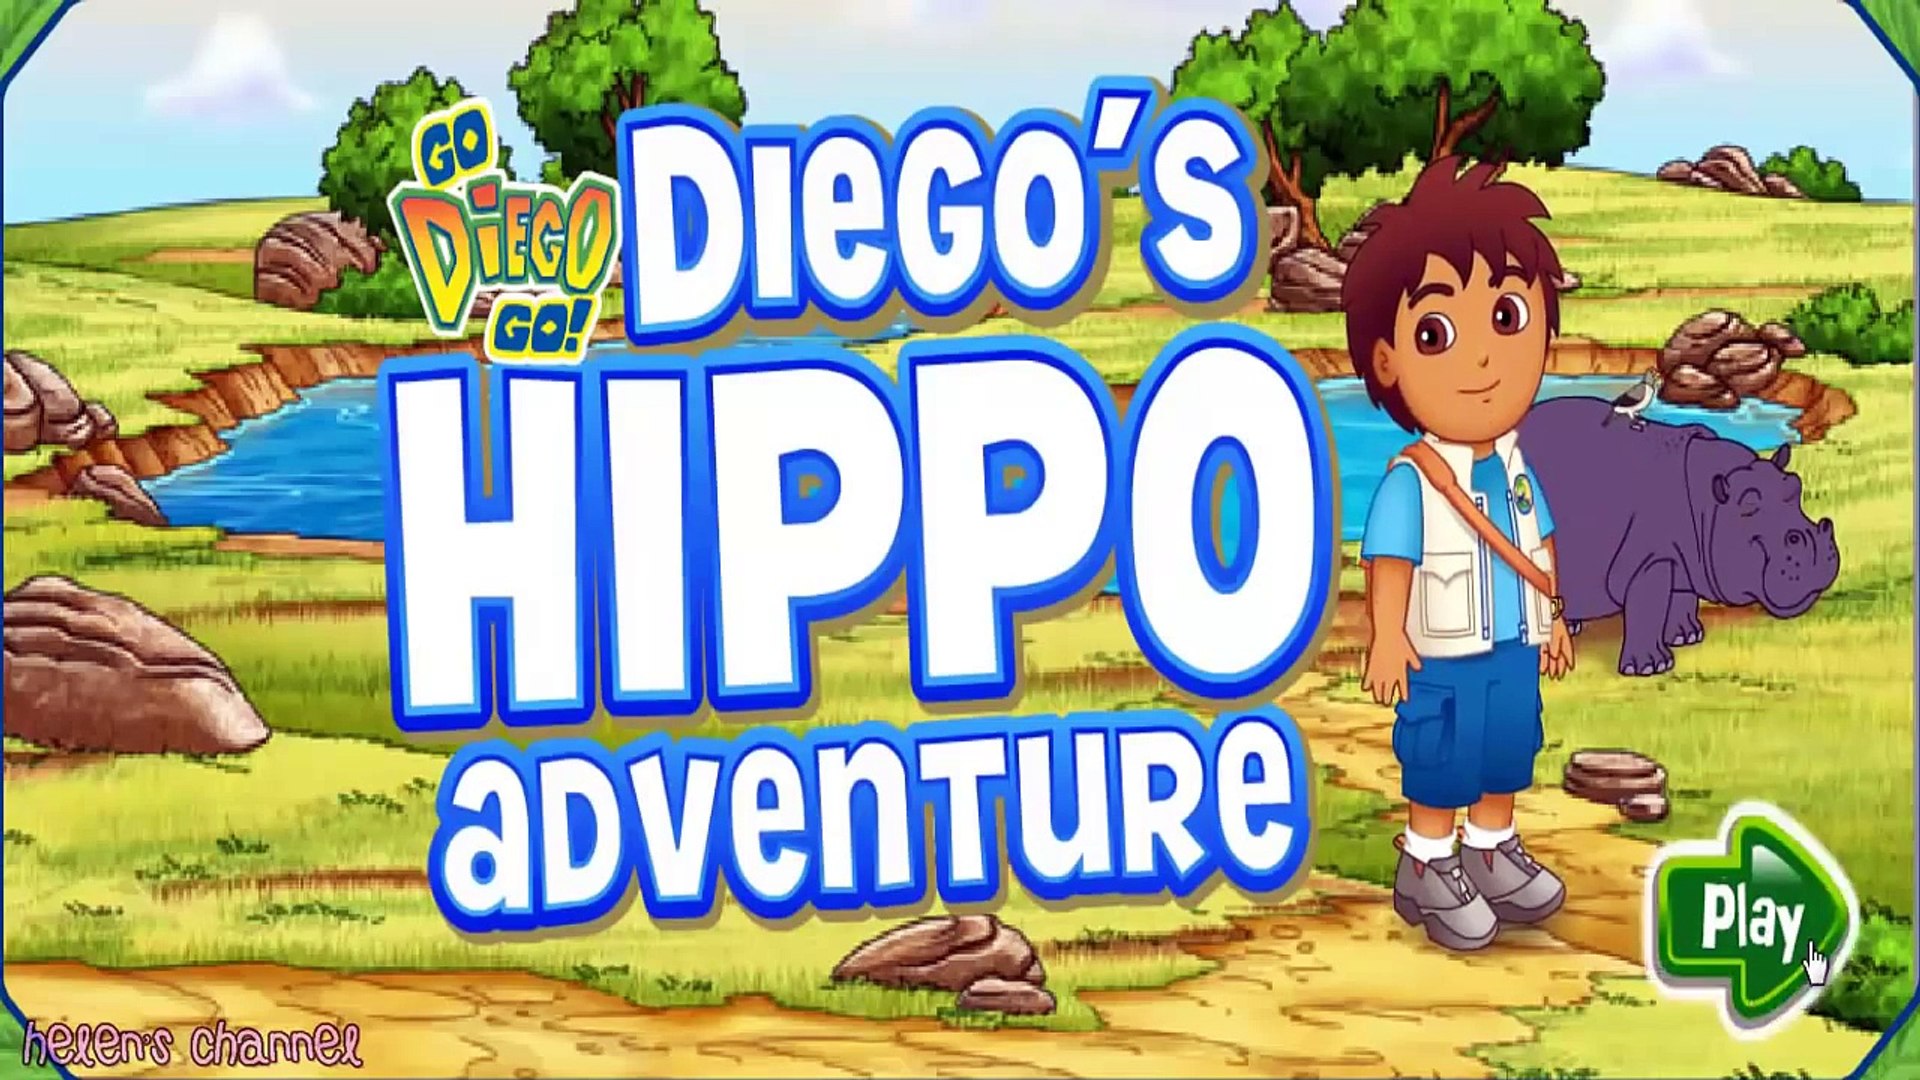 Go Diego Go! - Diegos Hippo Adventure | New Full Game English | Dora Friend  | Dora the Explorer - video Dailymotion